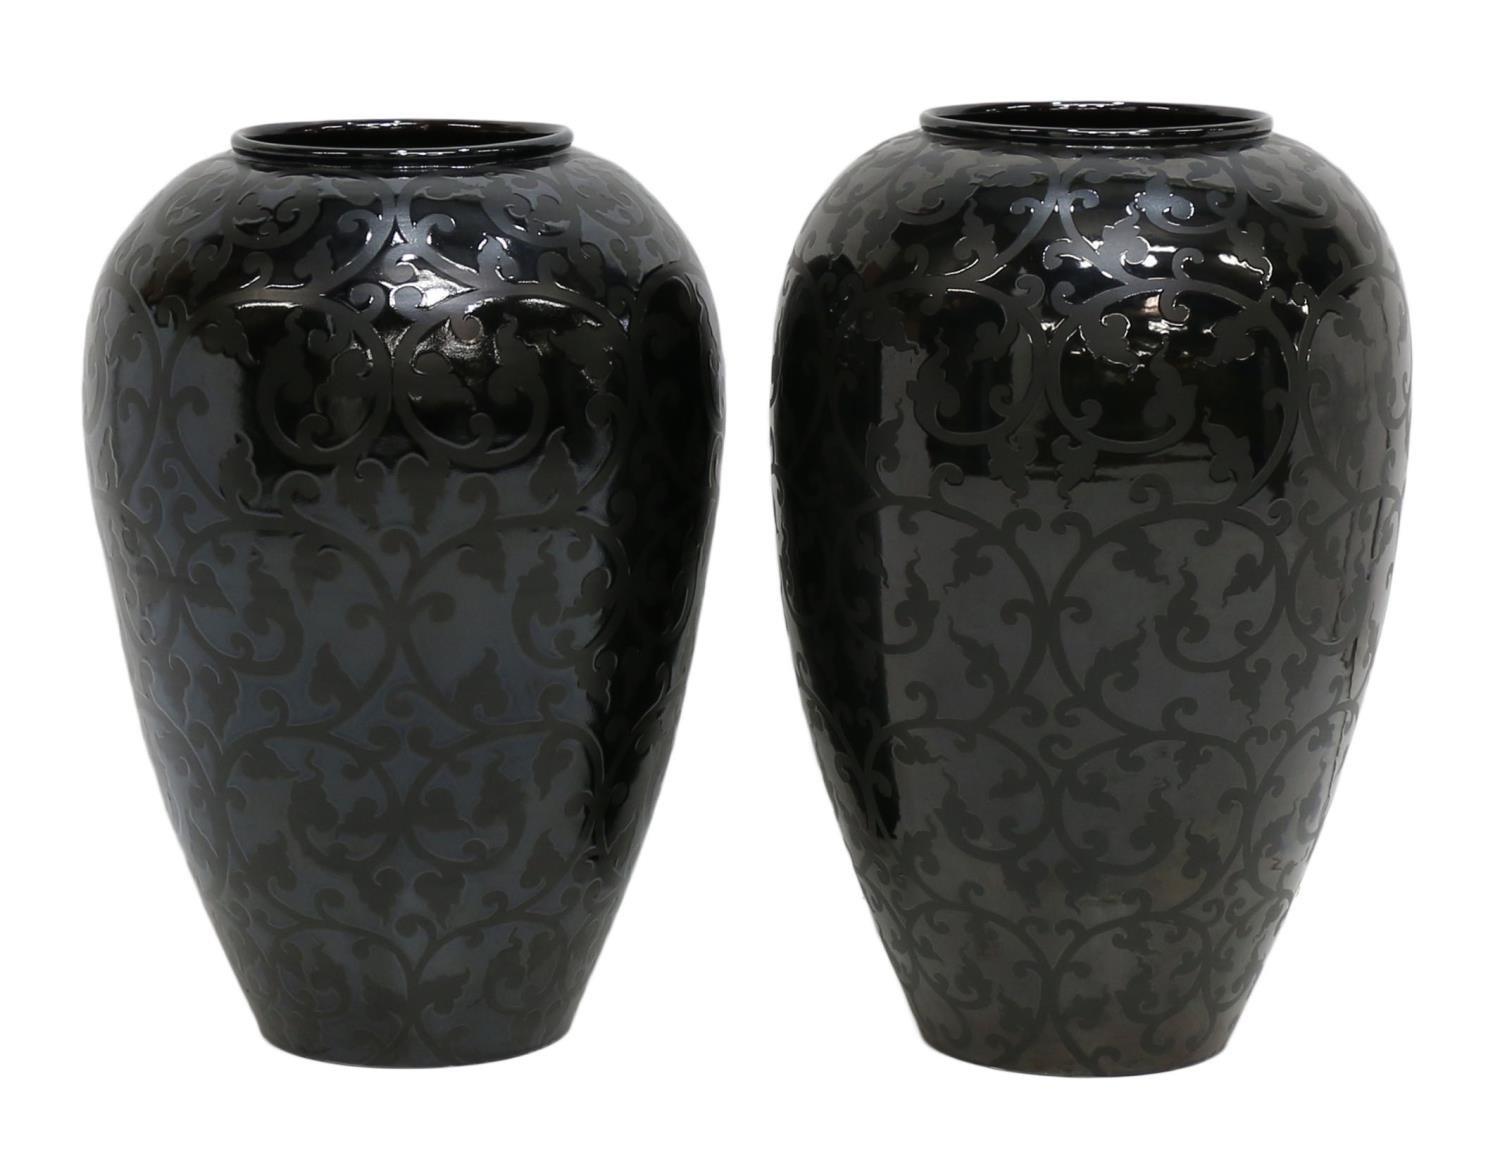 Ваза черная матовая. Ваза черная икеа АНГЕНЭМ. Ваза "Black" (стекло) d15xh41 см черный 182-137 (кор.). Черная матовая ваза. Плоская черная ваза.